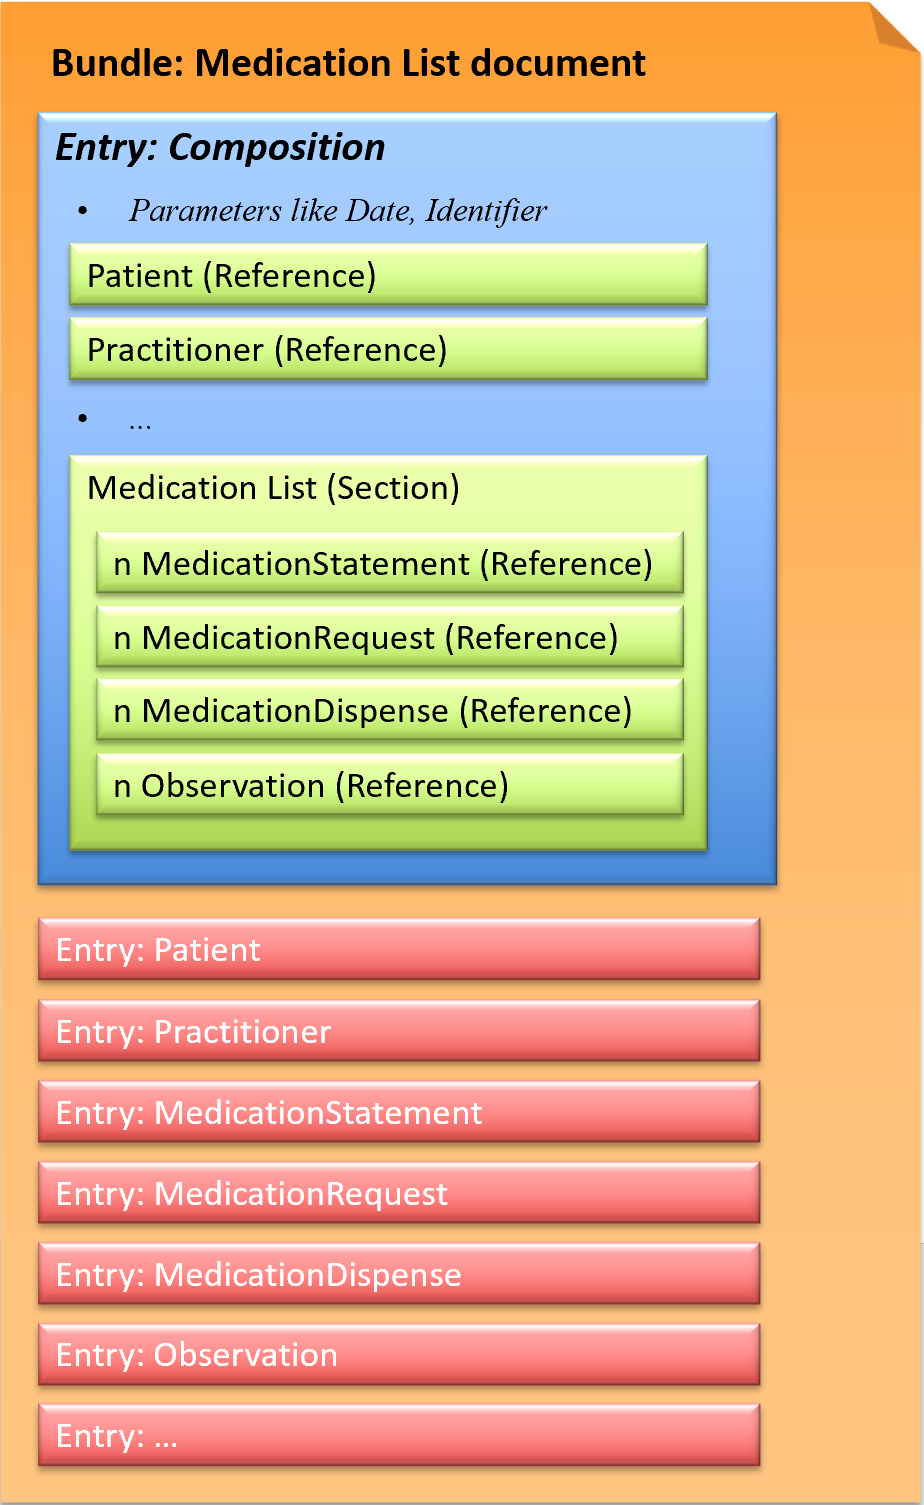 Fig.: Medication List document